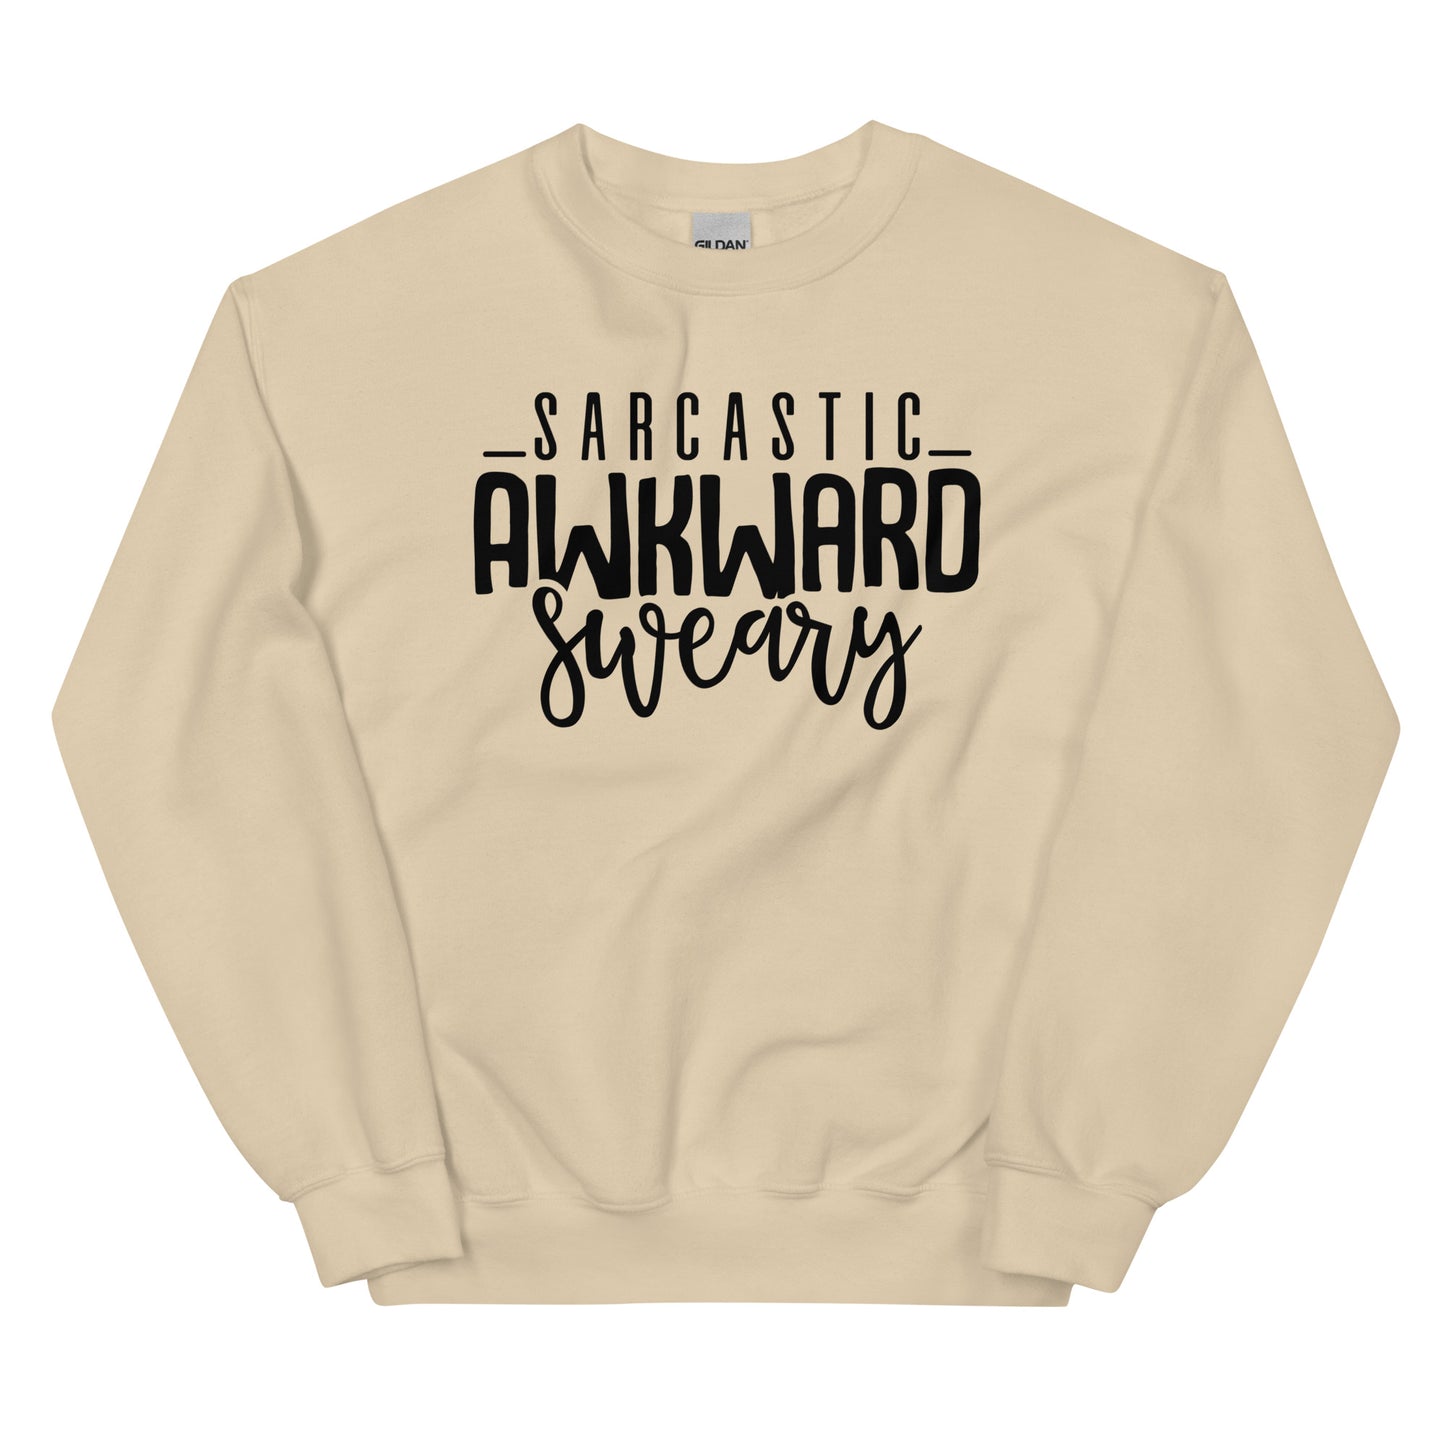 The Sarcastic, Awkward, Sweary Pullover Crewneck Sweatshirt